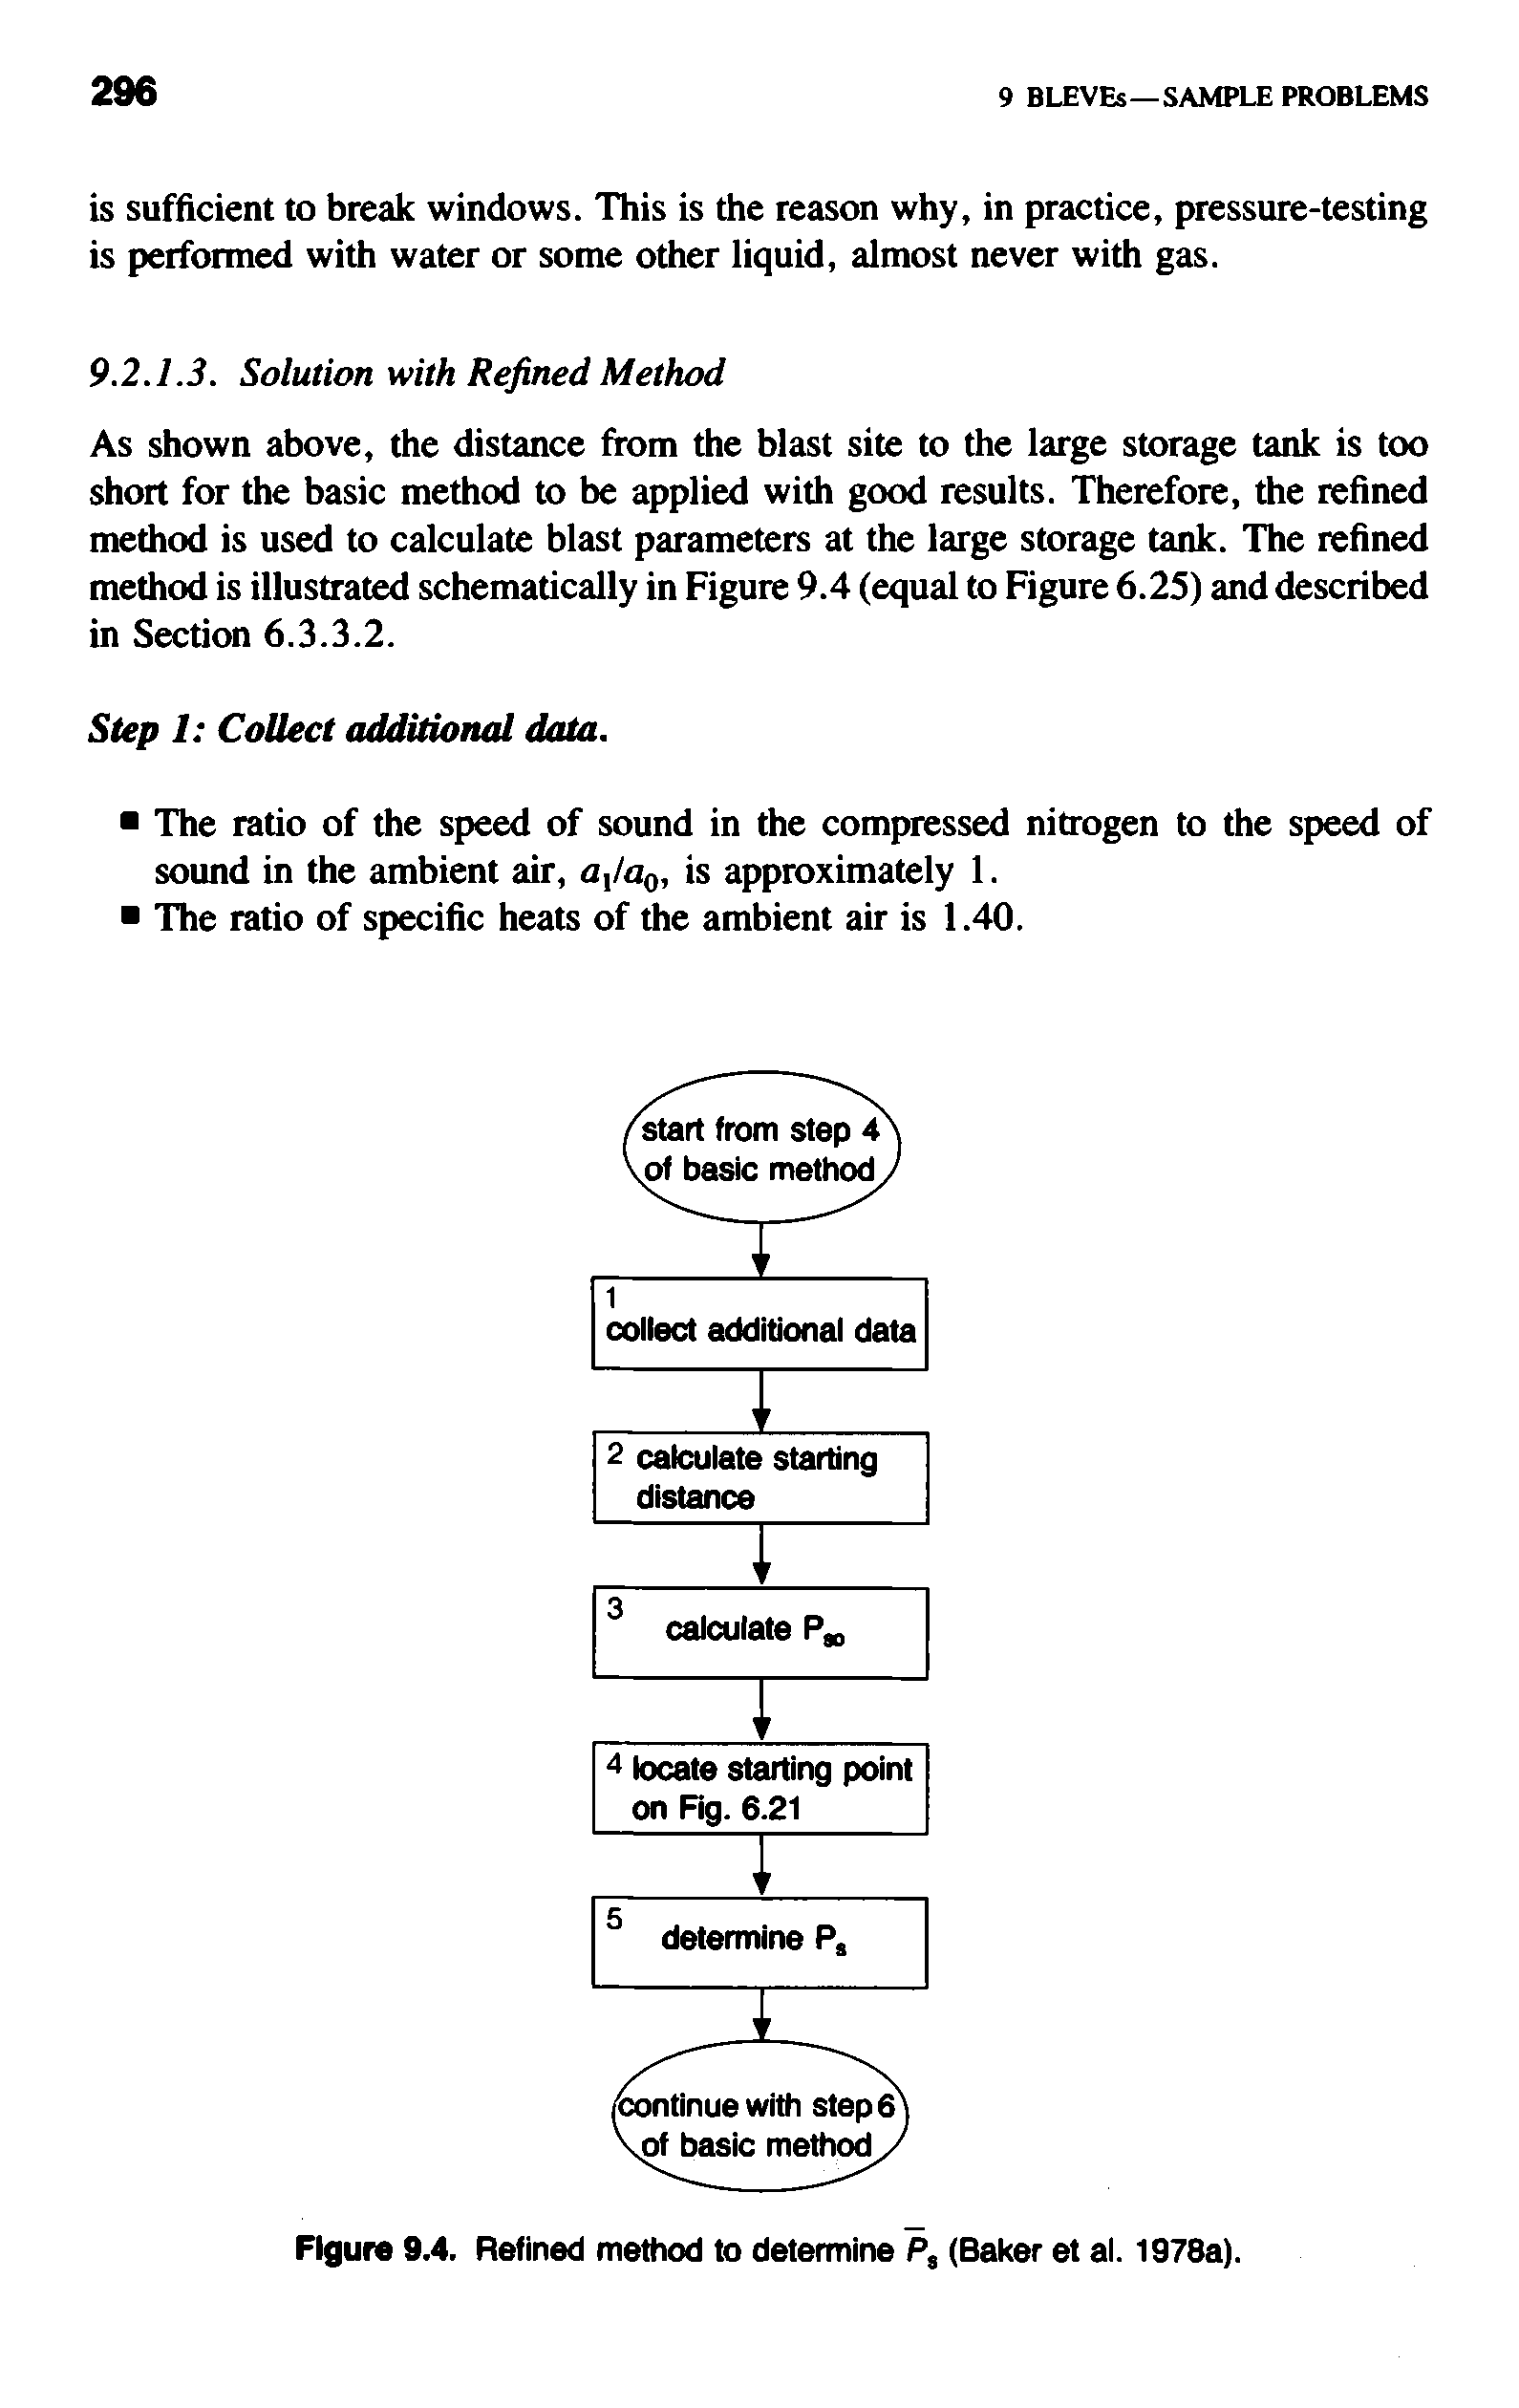 Figure 9.4. Refined method to determine P, (Baker et al. 1978a).